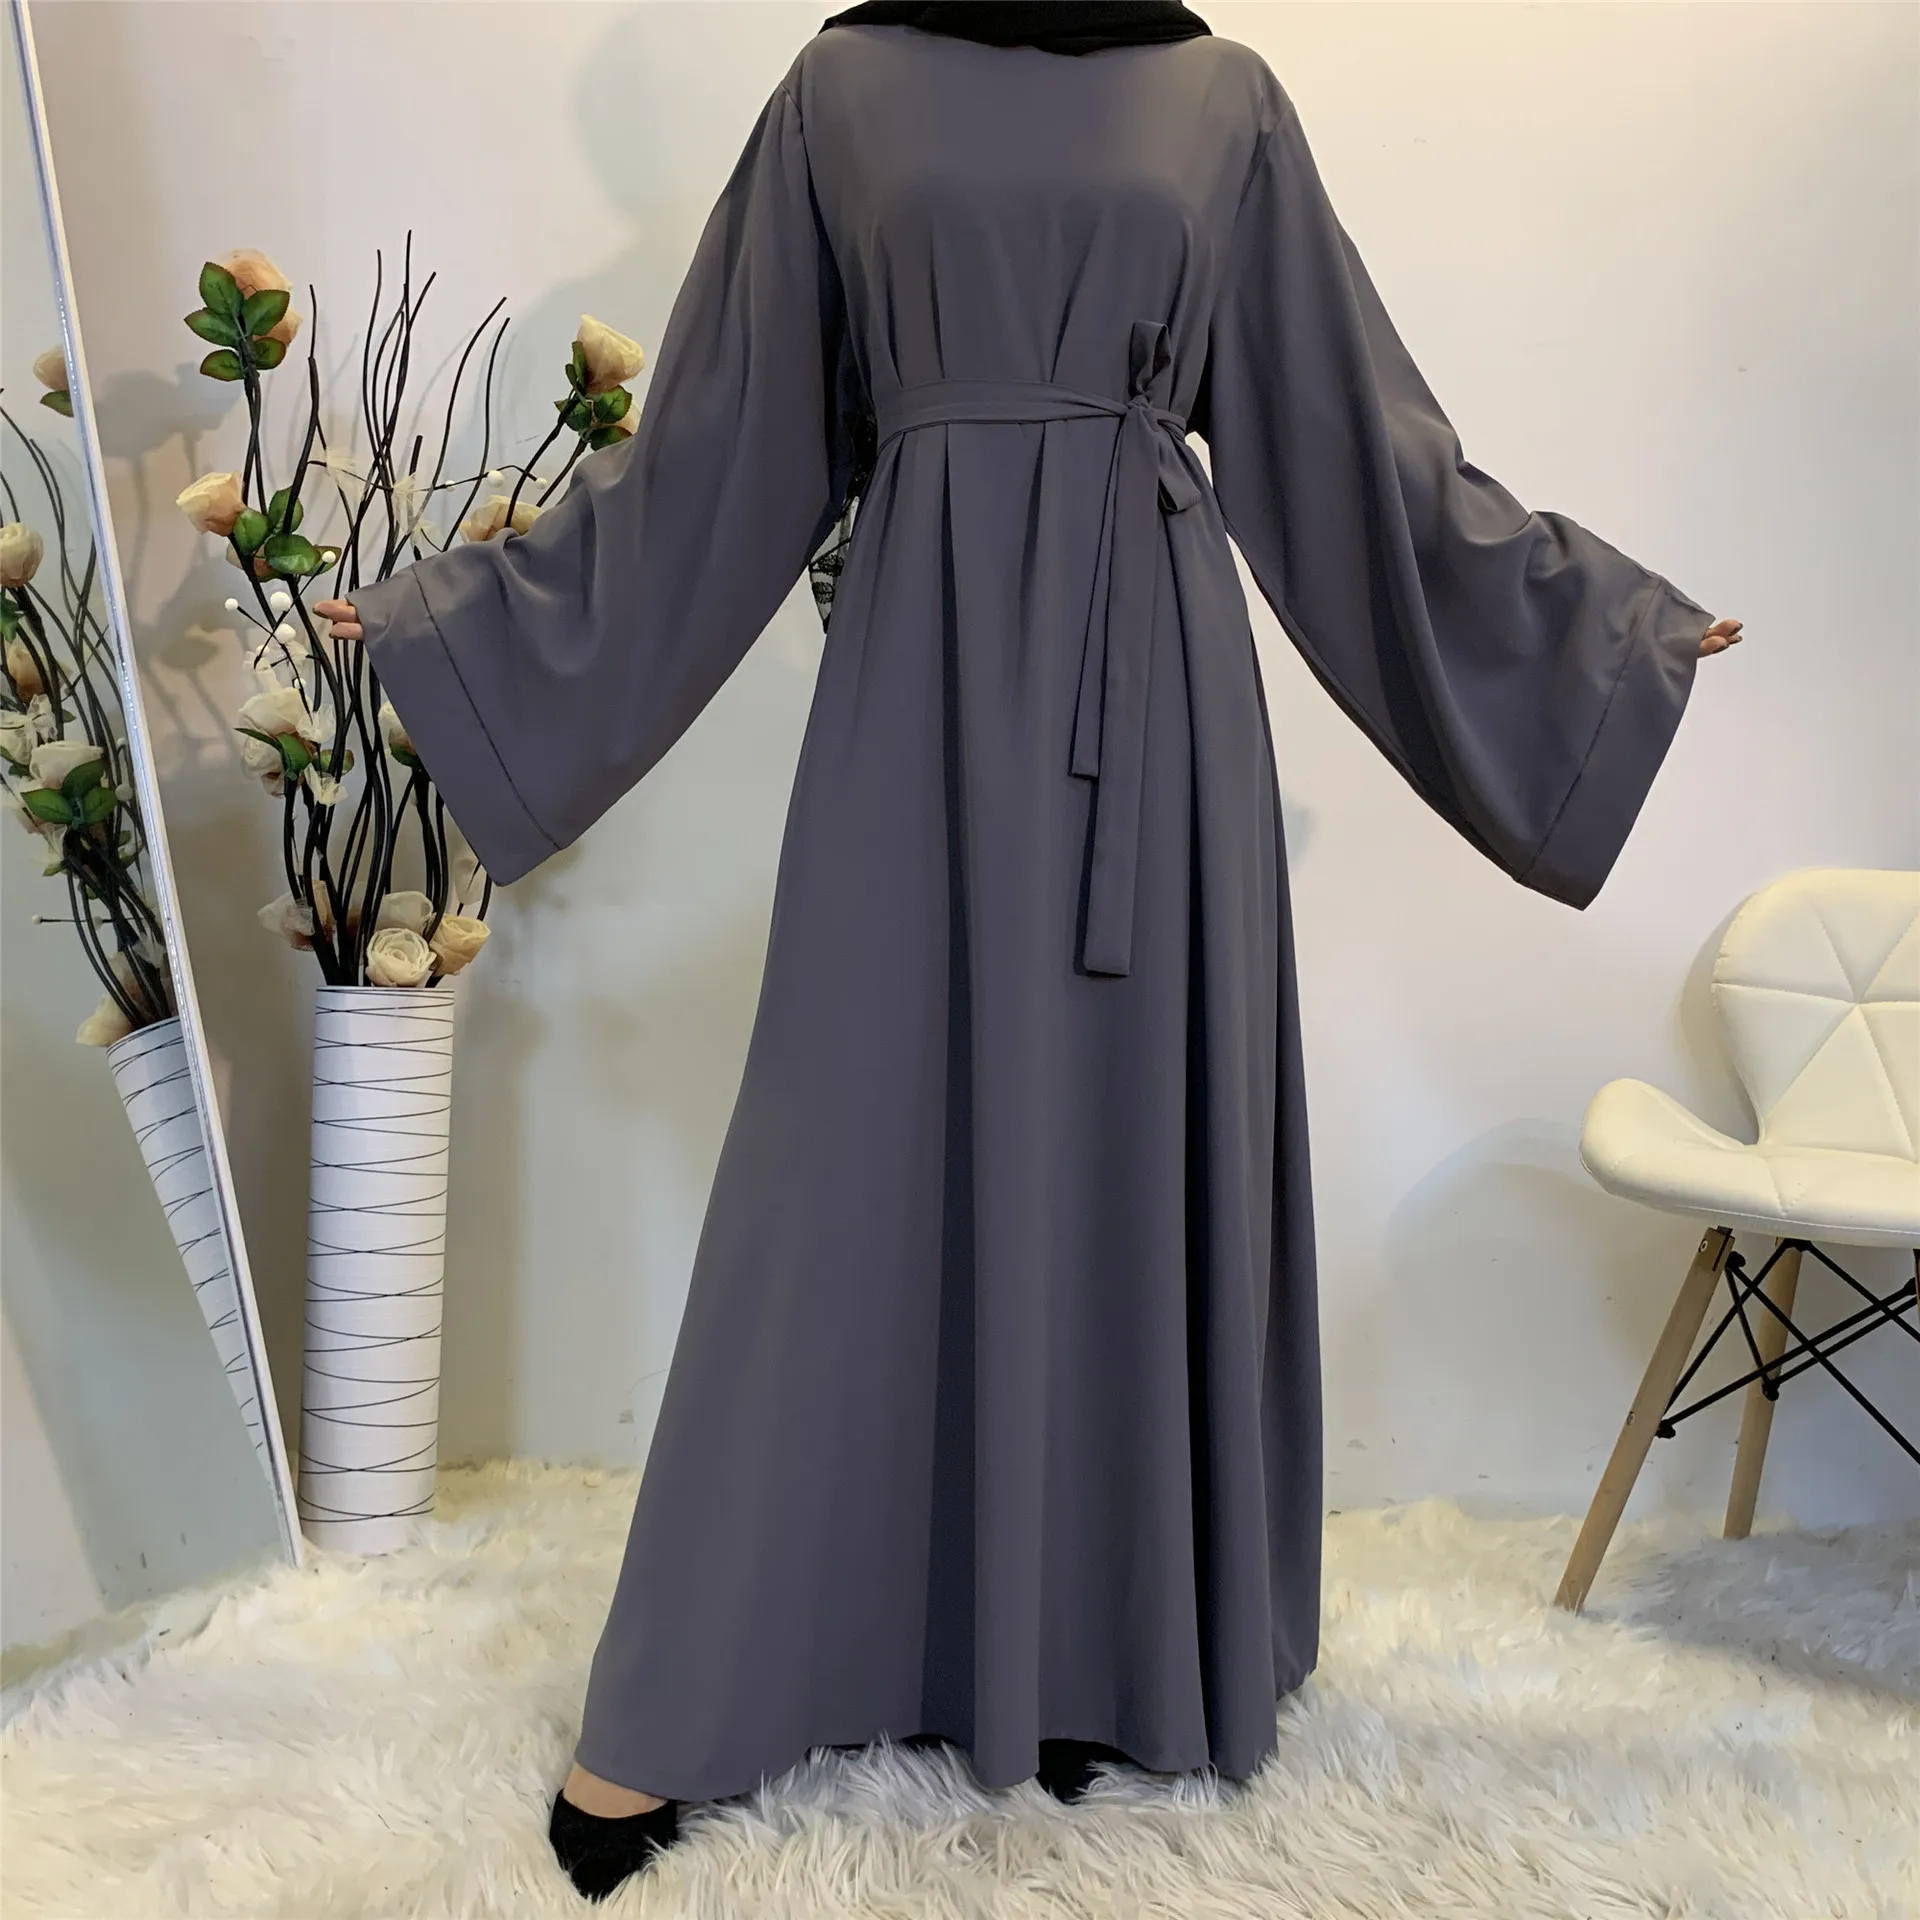 hijab na moda, Dubai Abaya, roupas islâmicas, Djellaba africana